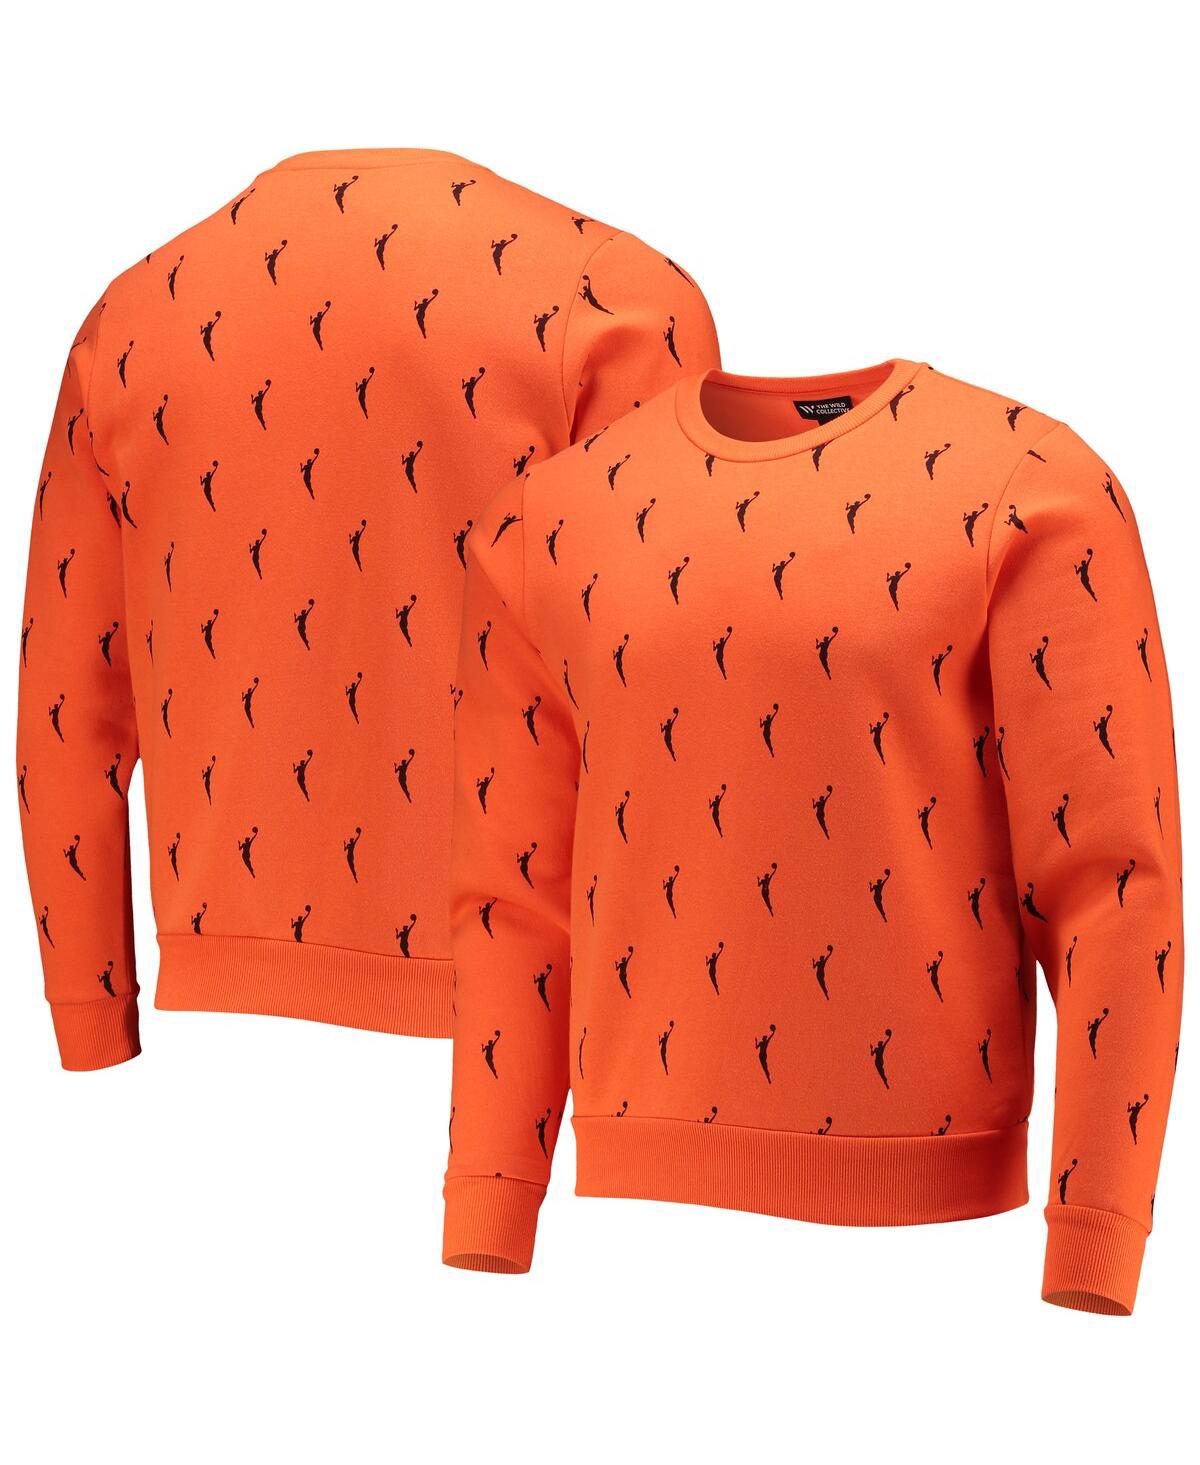 Shop The Wild Collective Men's And Women's Orange Wnba Logowoman All Over Logo Pullover Sweatshirt